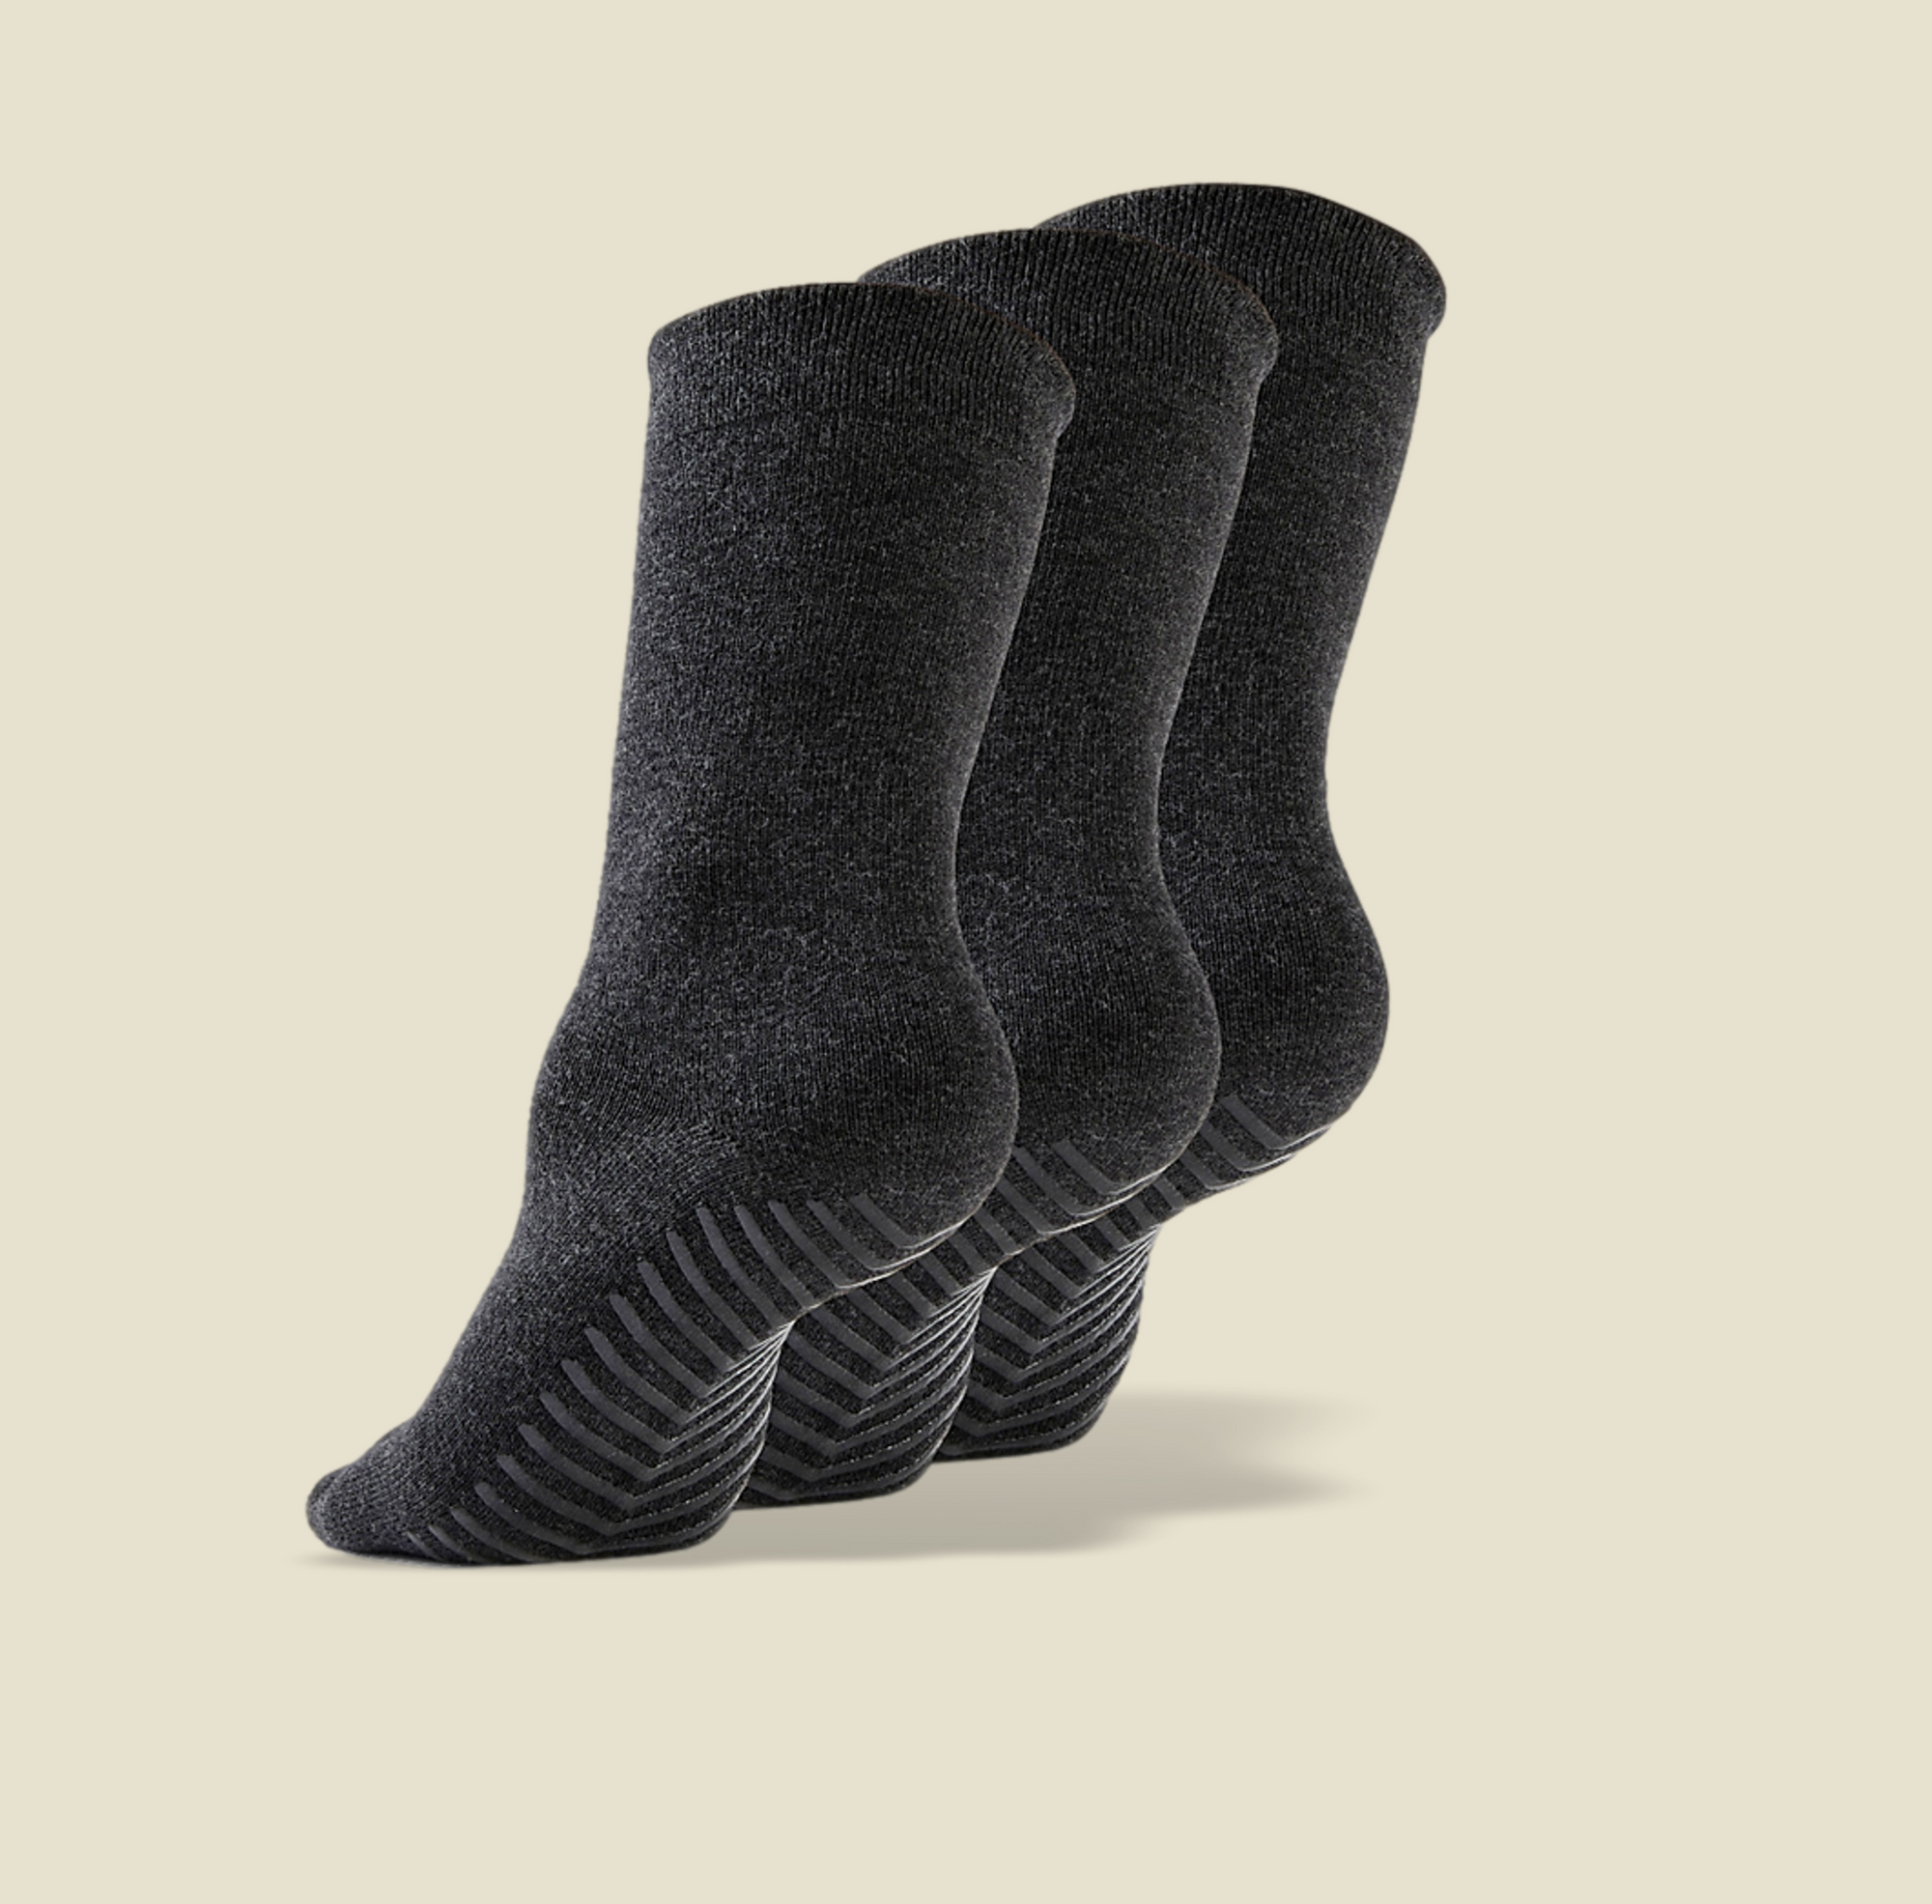 Men's Dark Grey Original Crew Non-Slip Socks - 3 pairs - Gripjoy Socks